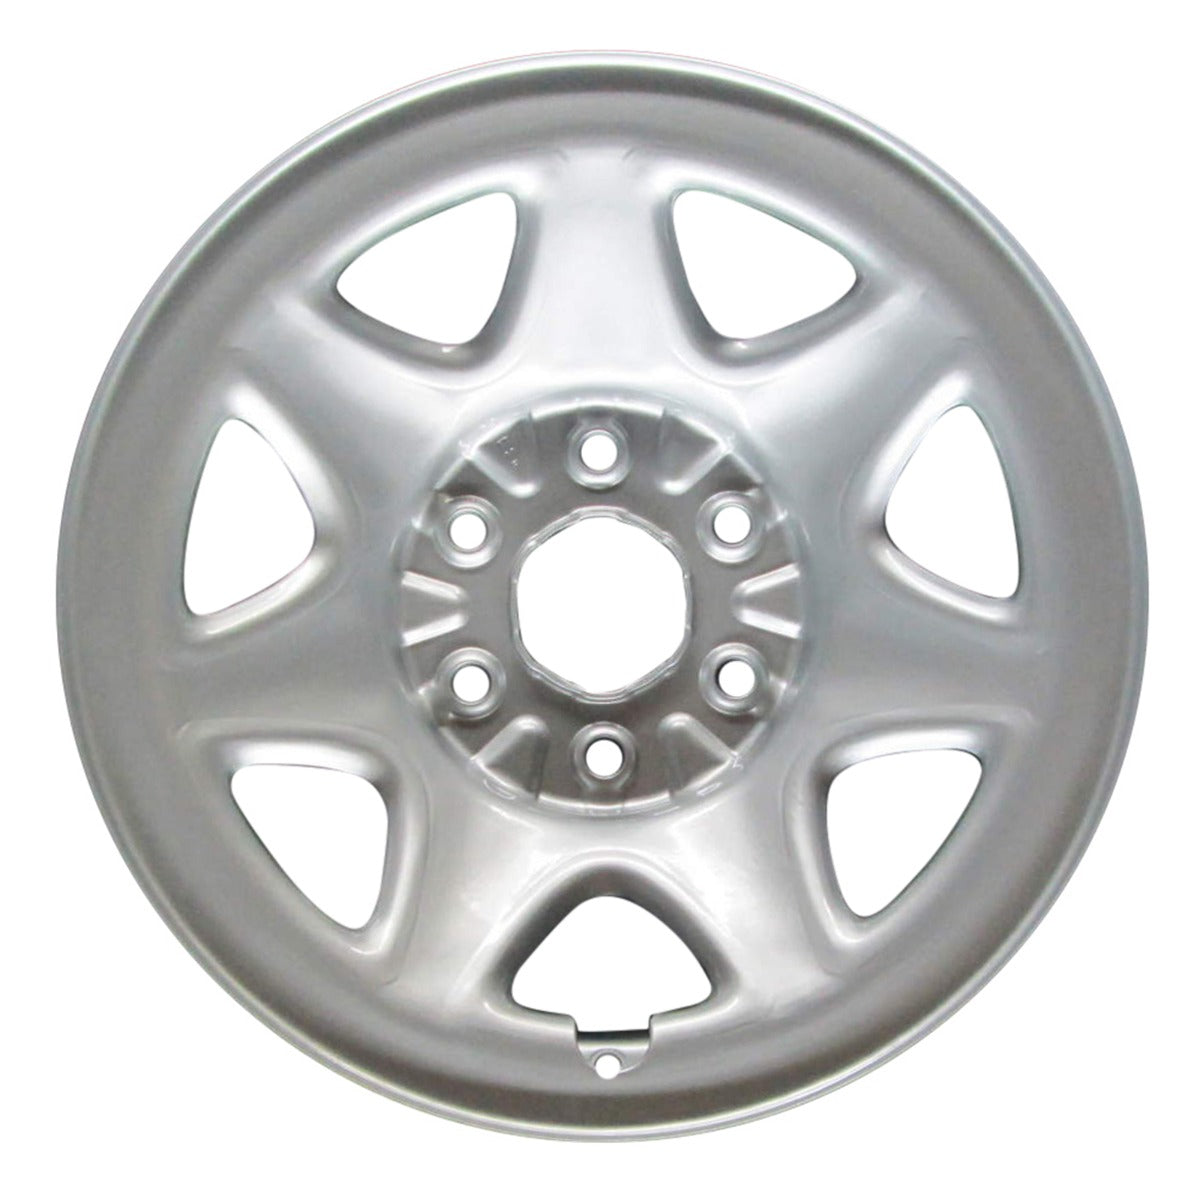 2014 Chevrolet Silverado 1500 17" OEM Wheel Rim W5659S